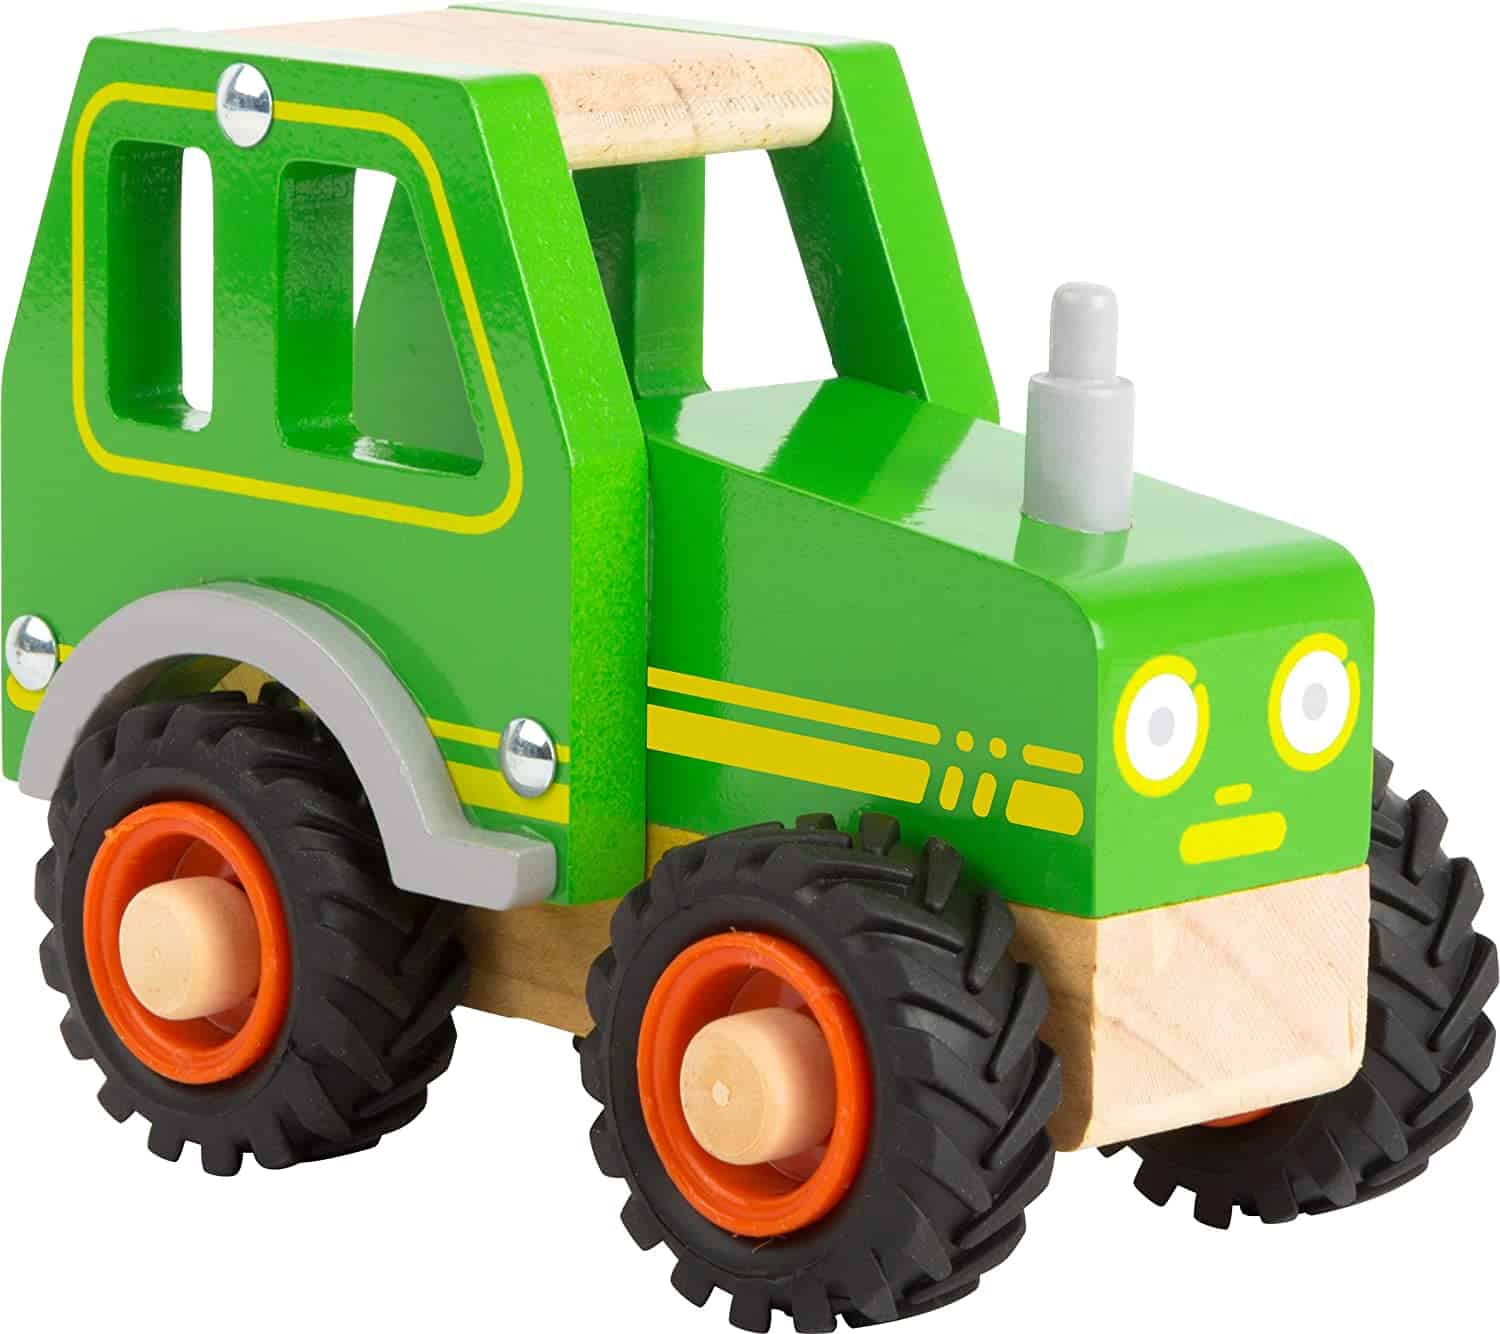 Leukste speelgoed tractor van hout: Small Foot Legler